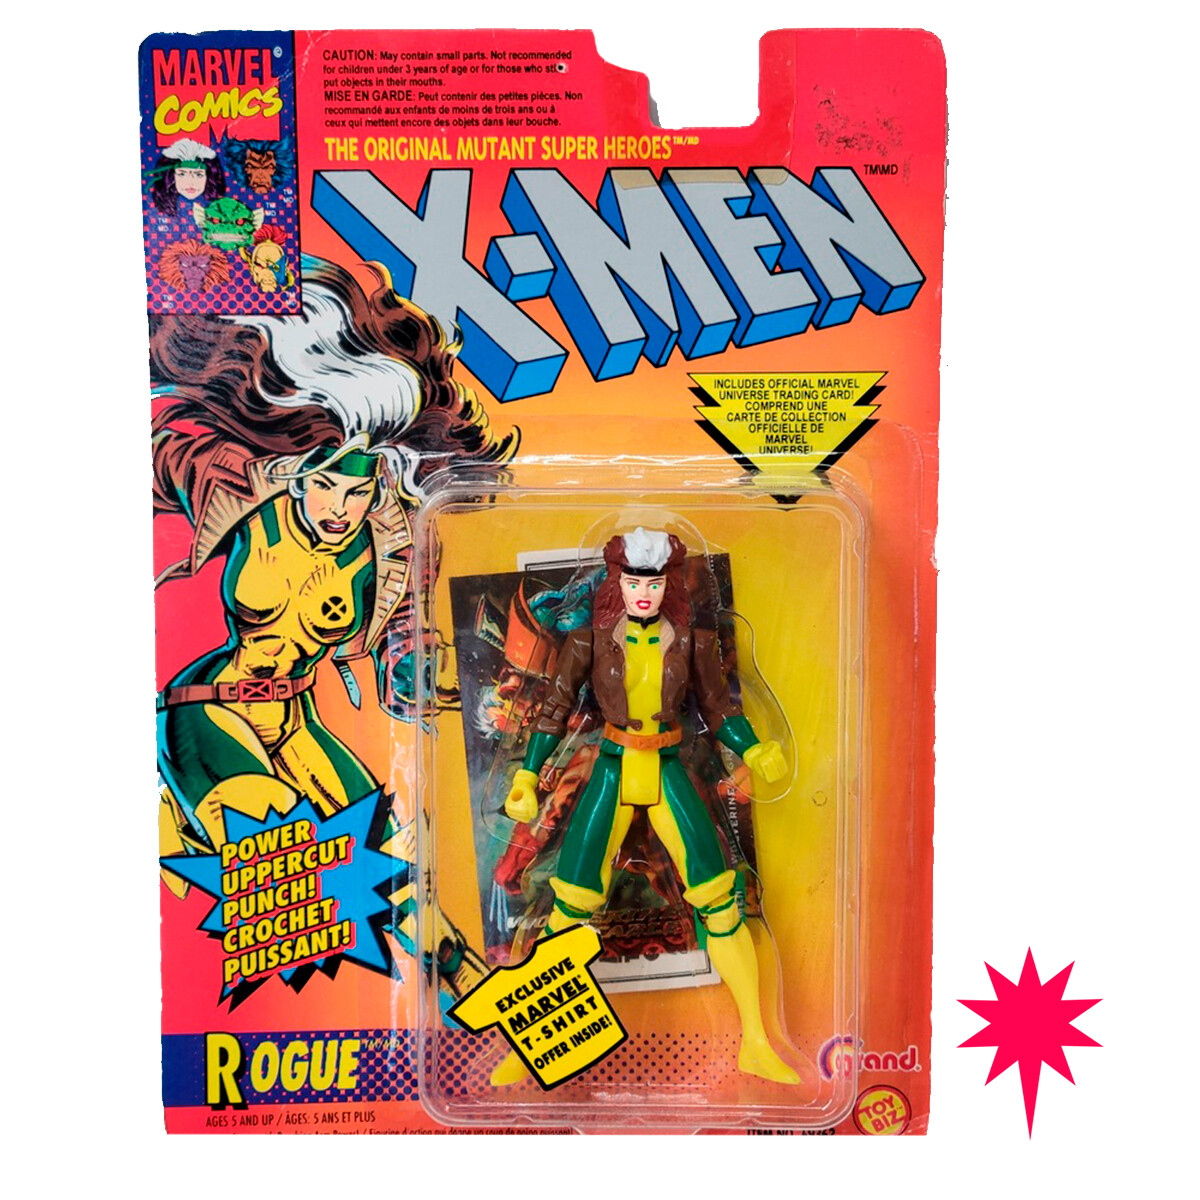 X-MEN ANIMATED SERIES - ROGUE POWER UPPERCUT PUNCH 1994 TOYBIZ 